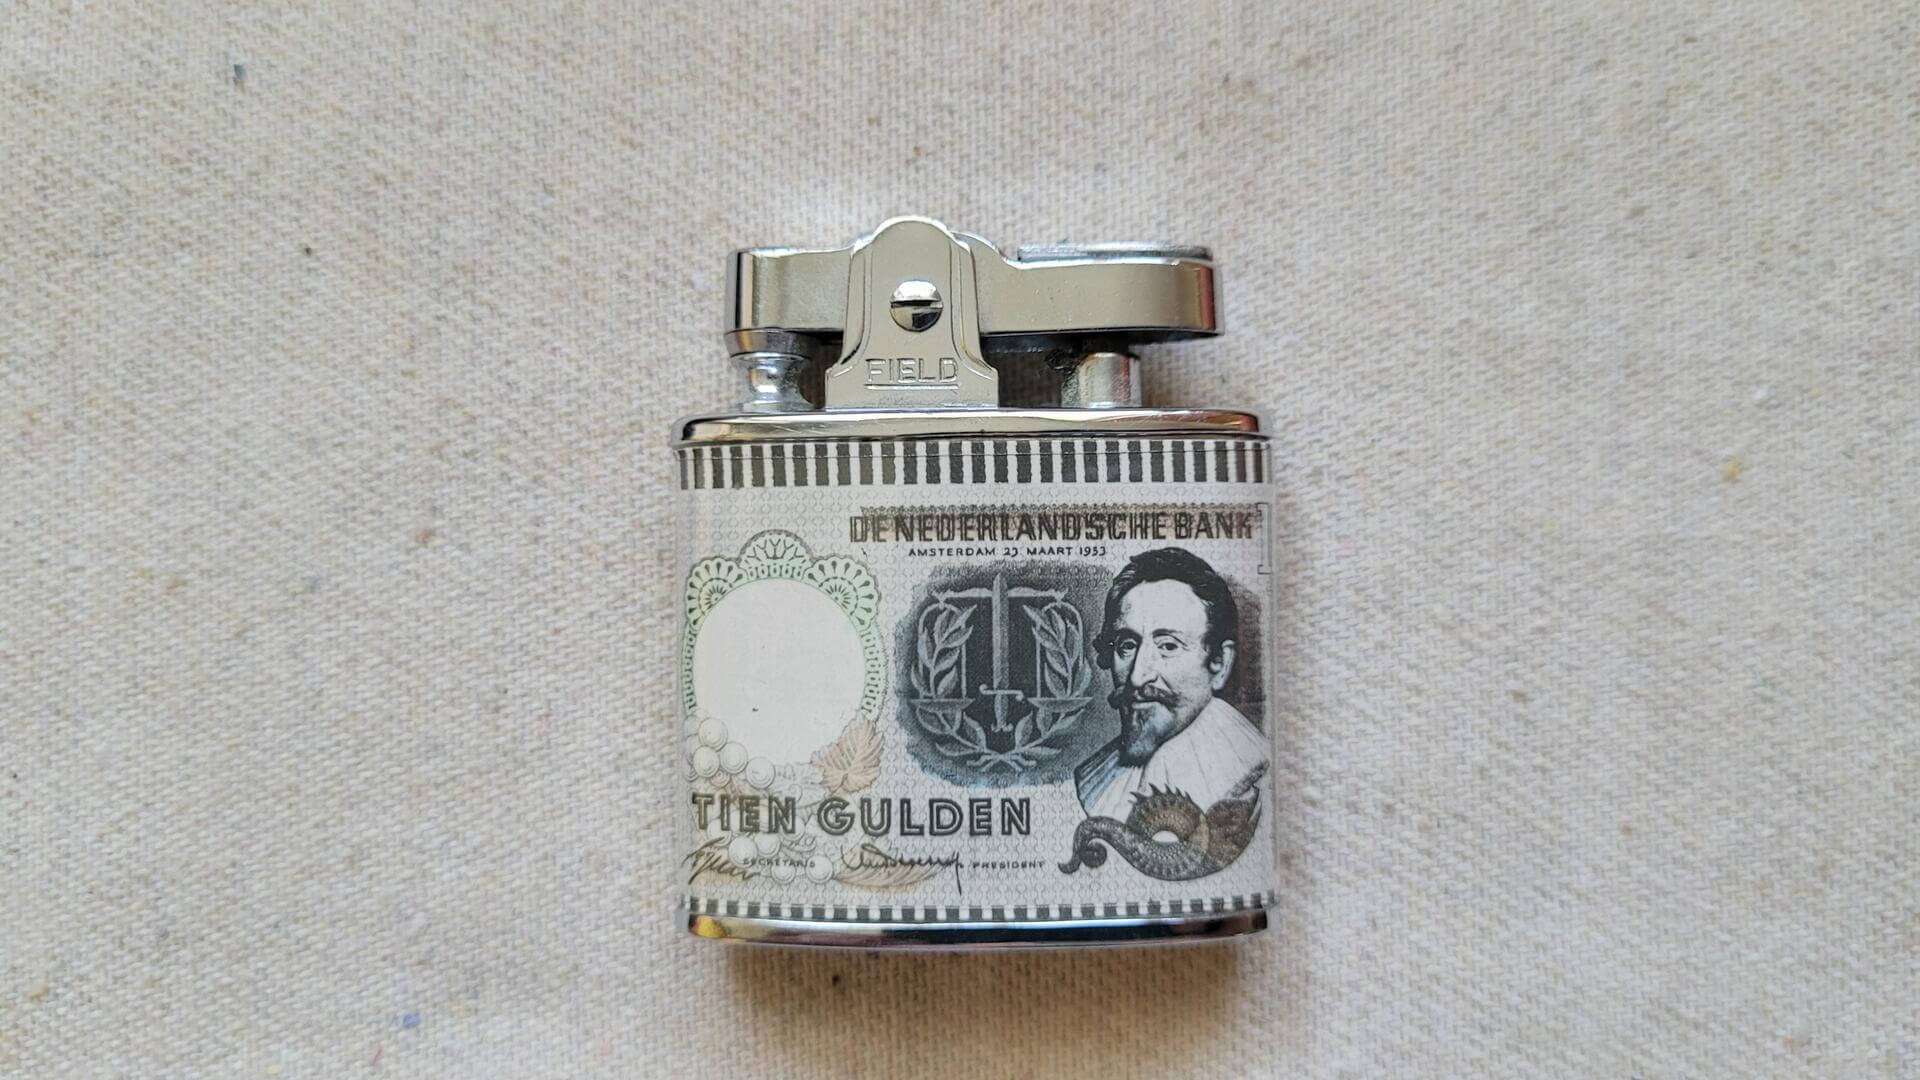 Rare Vintage Field Highquality Standard Automatic Petrol Lighter Ten Gulden Dutch Bank Note Design - Retro Tobacciana Collectibles